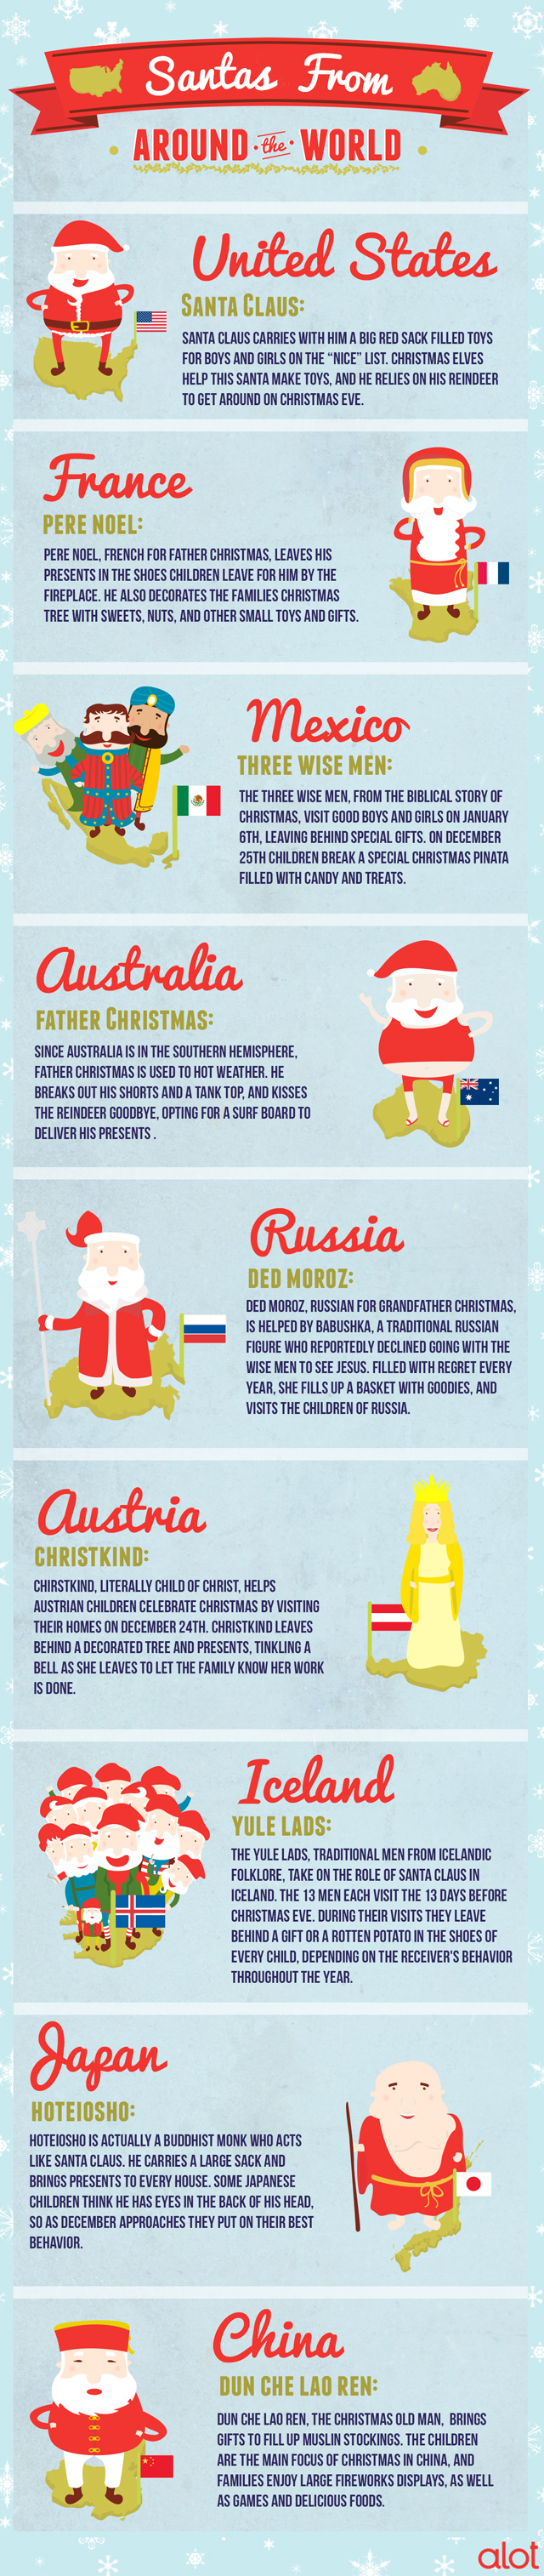 9 Santas From Around the World